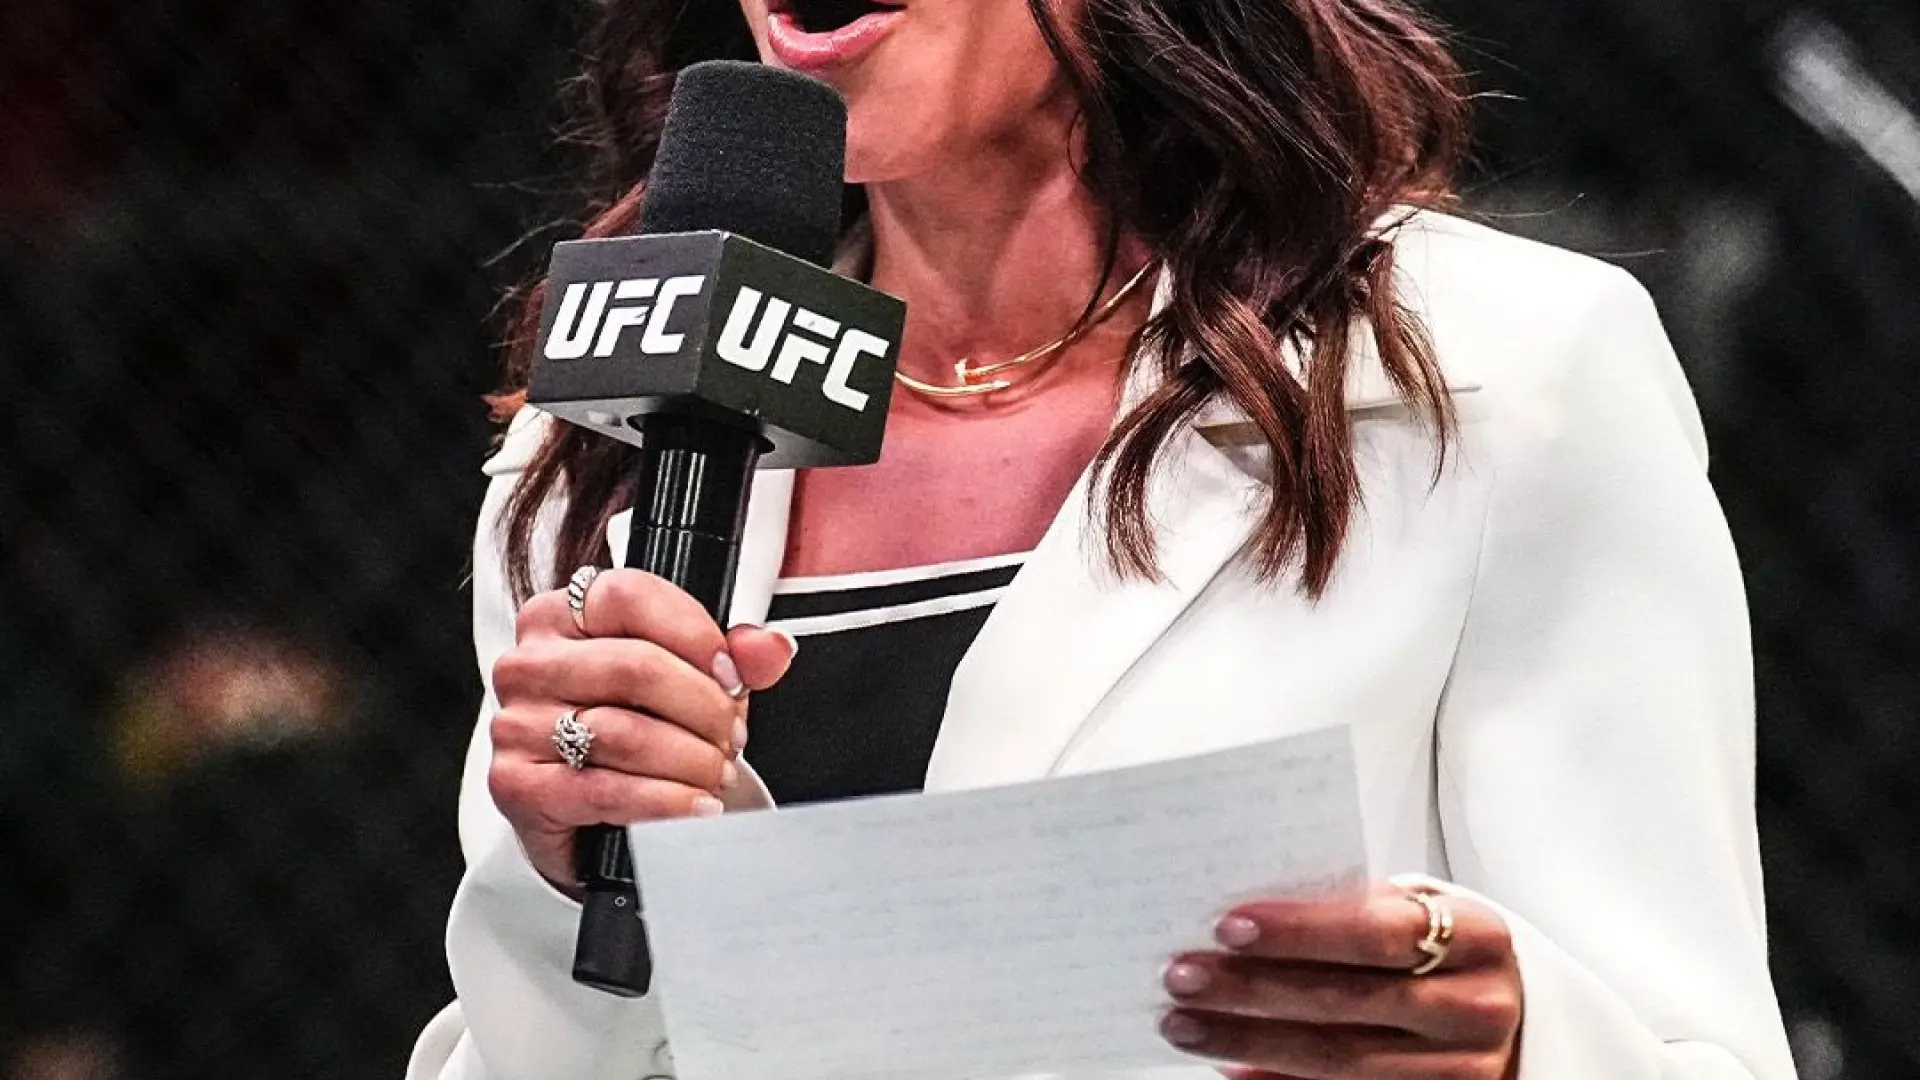 Charly Arnolt hace historia en la UFC: se convierte en la primera 'speaker' oficial